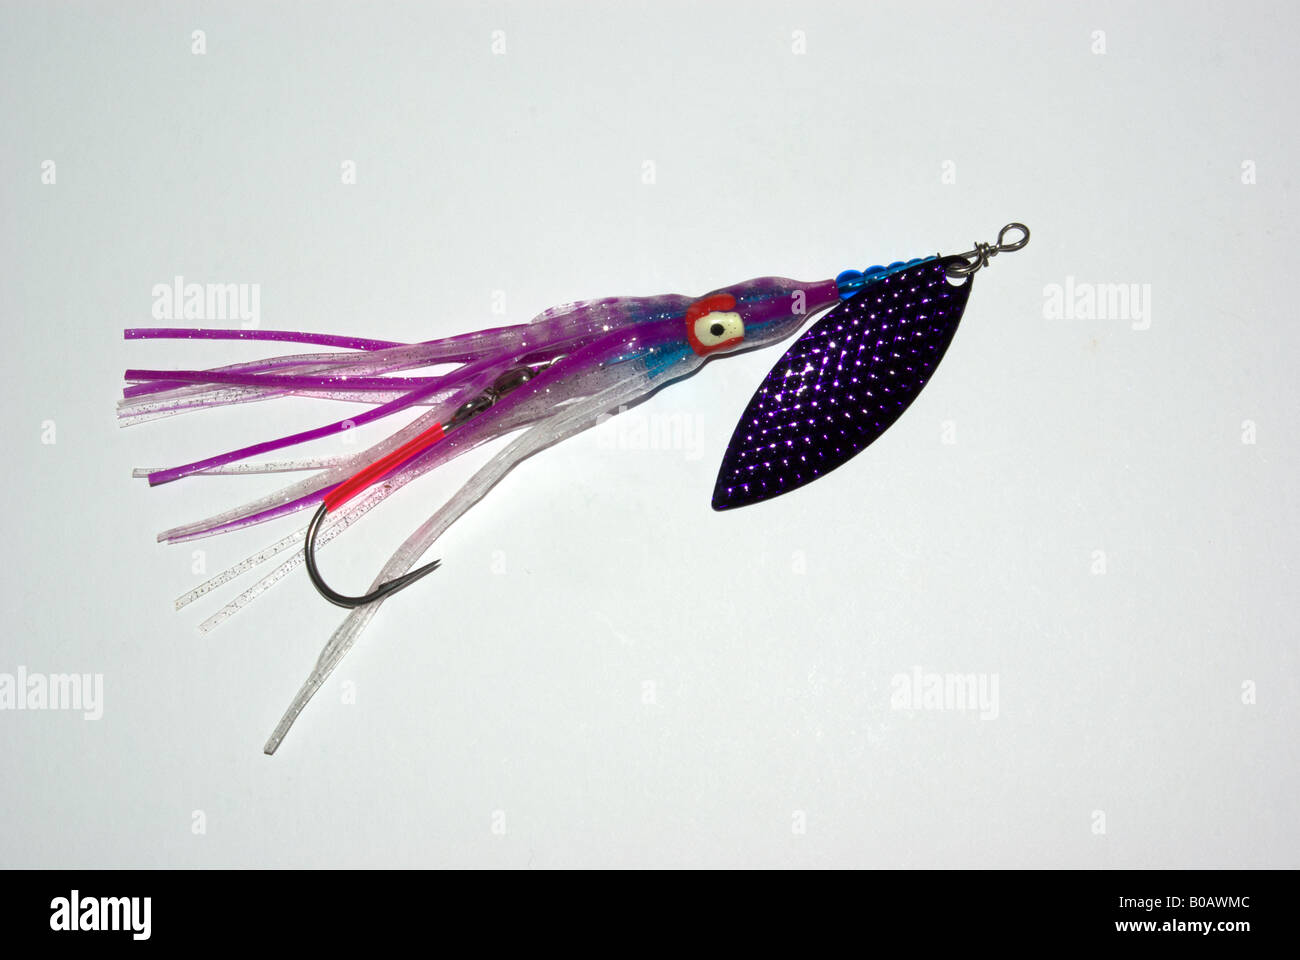 https://c8.alamy.com/comp/B0AWMC/octopus-hoochie-with-spinner-blade-trolling-lure-for-coho-salmon-fishing-B0AWMC.jpg